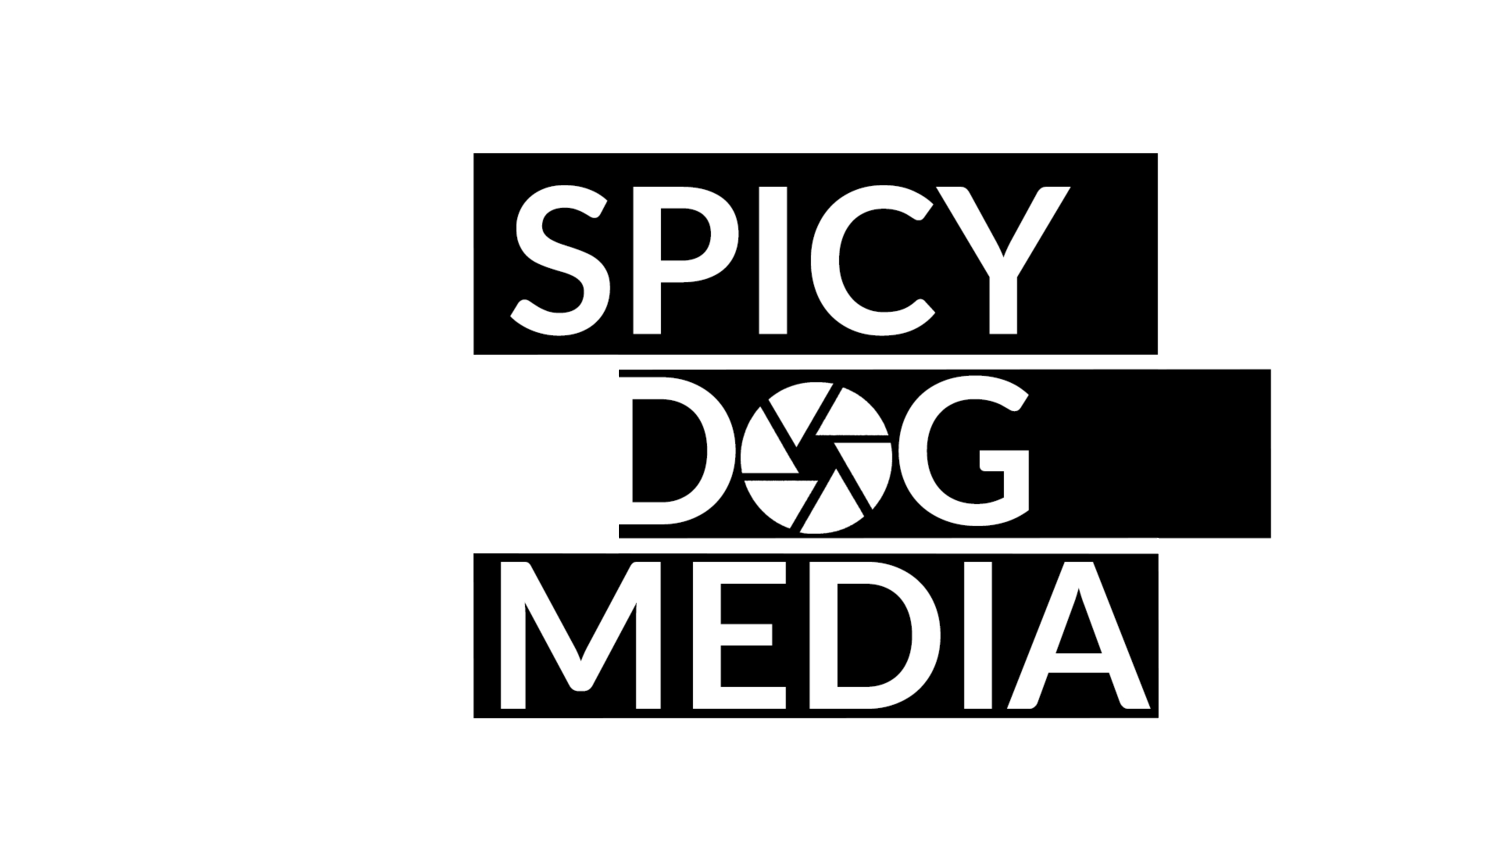 Spicy Dog Media